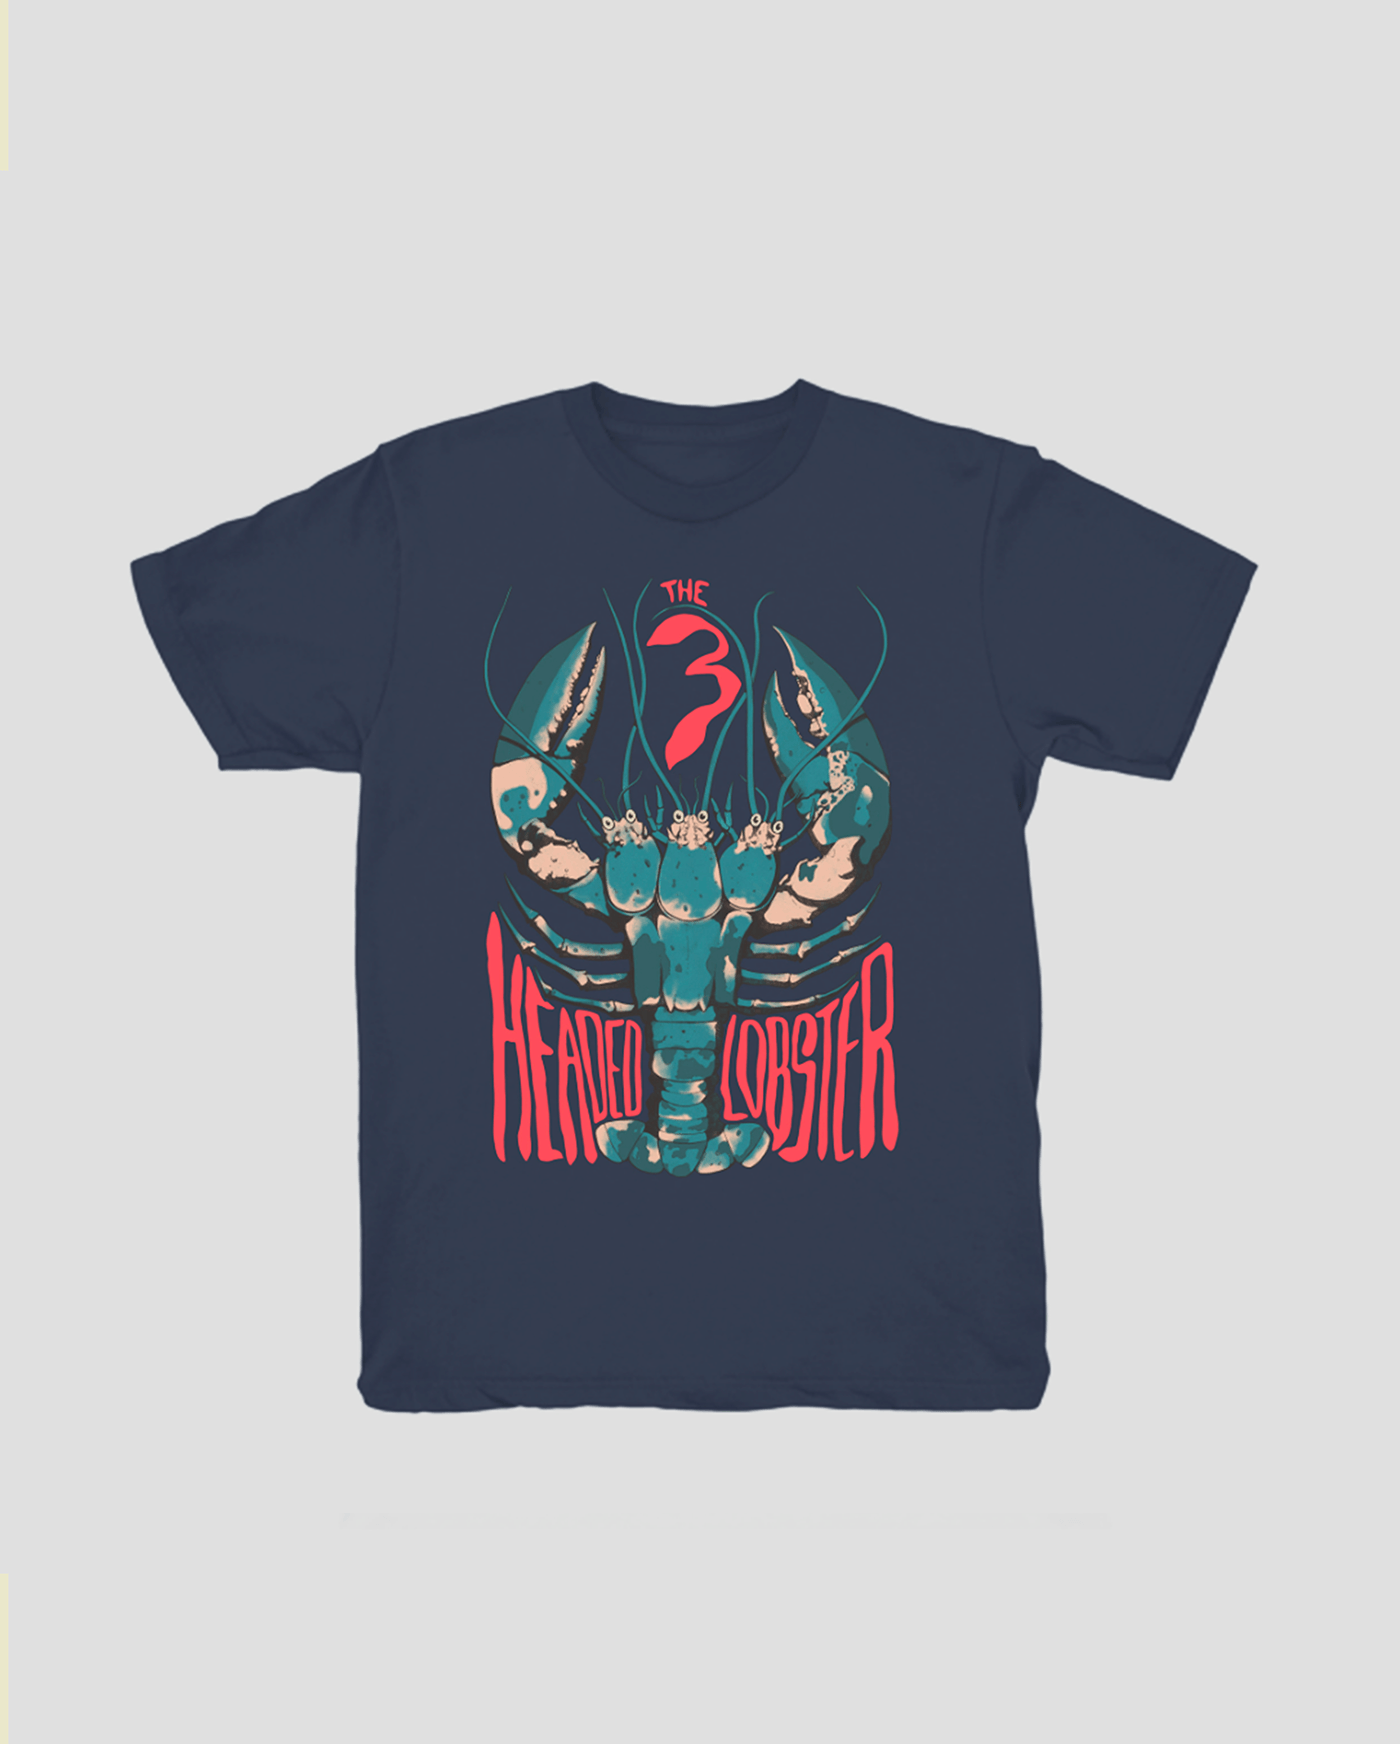 t-shirt Tshirt Design Clothing typography   louis picard Digital Art  ILLUSTRATION  Drawing  animal lobster